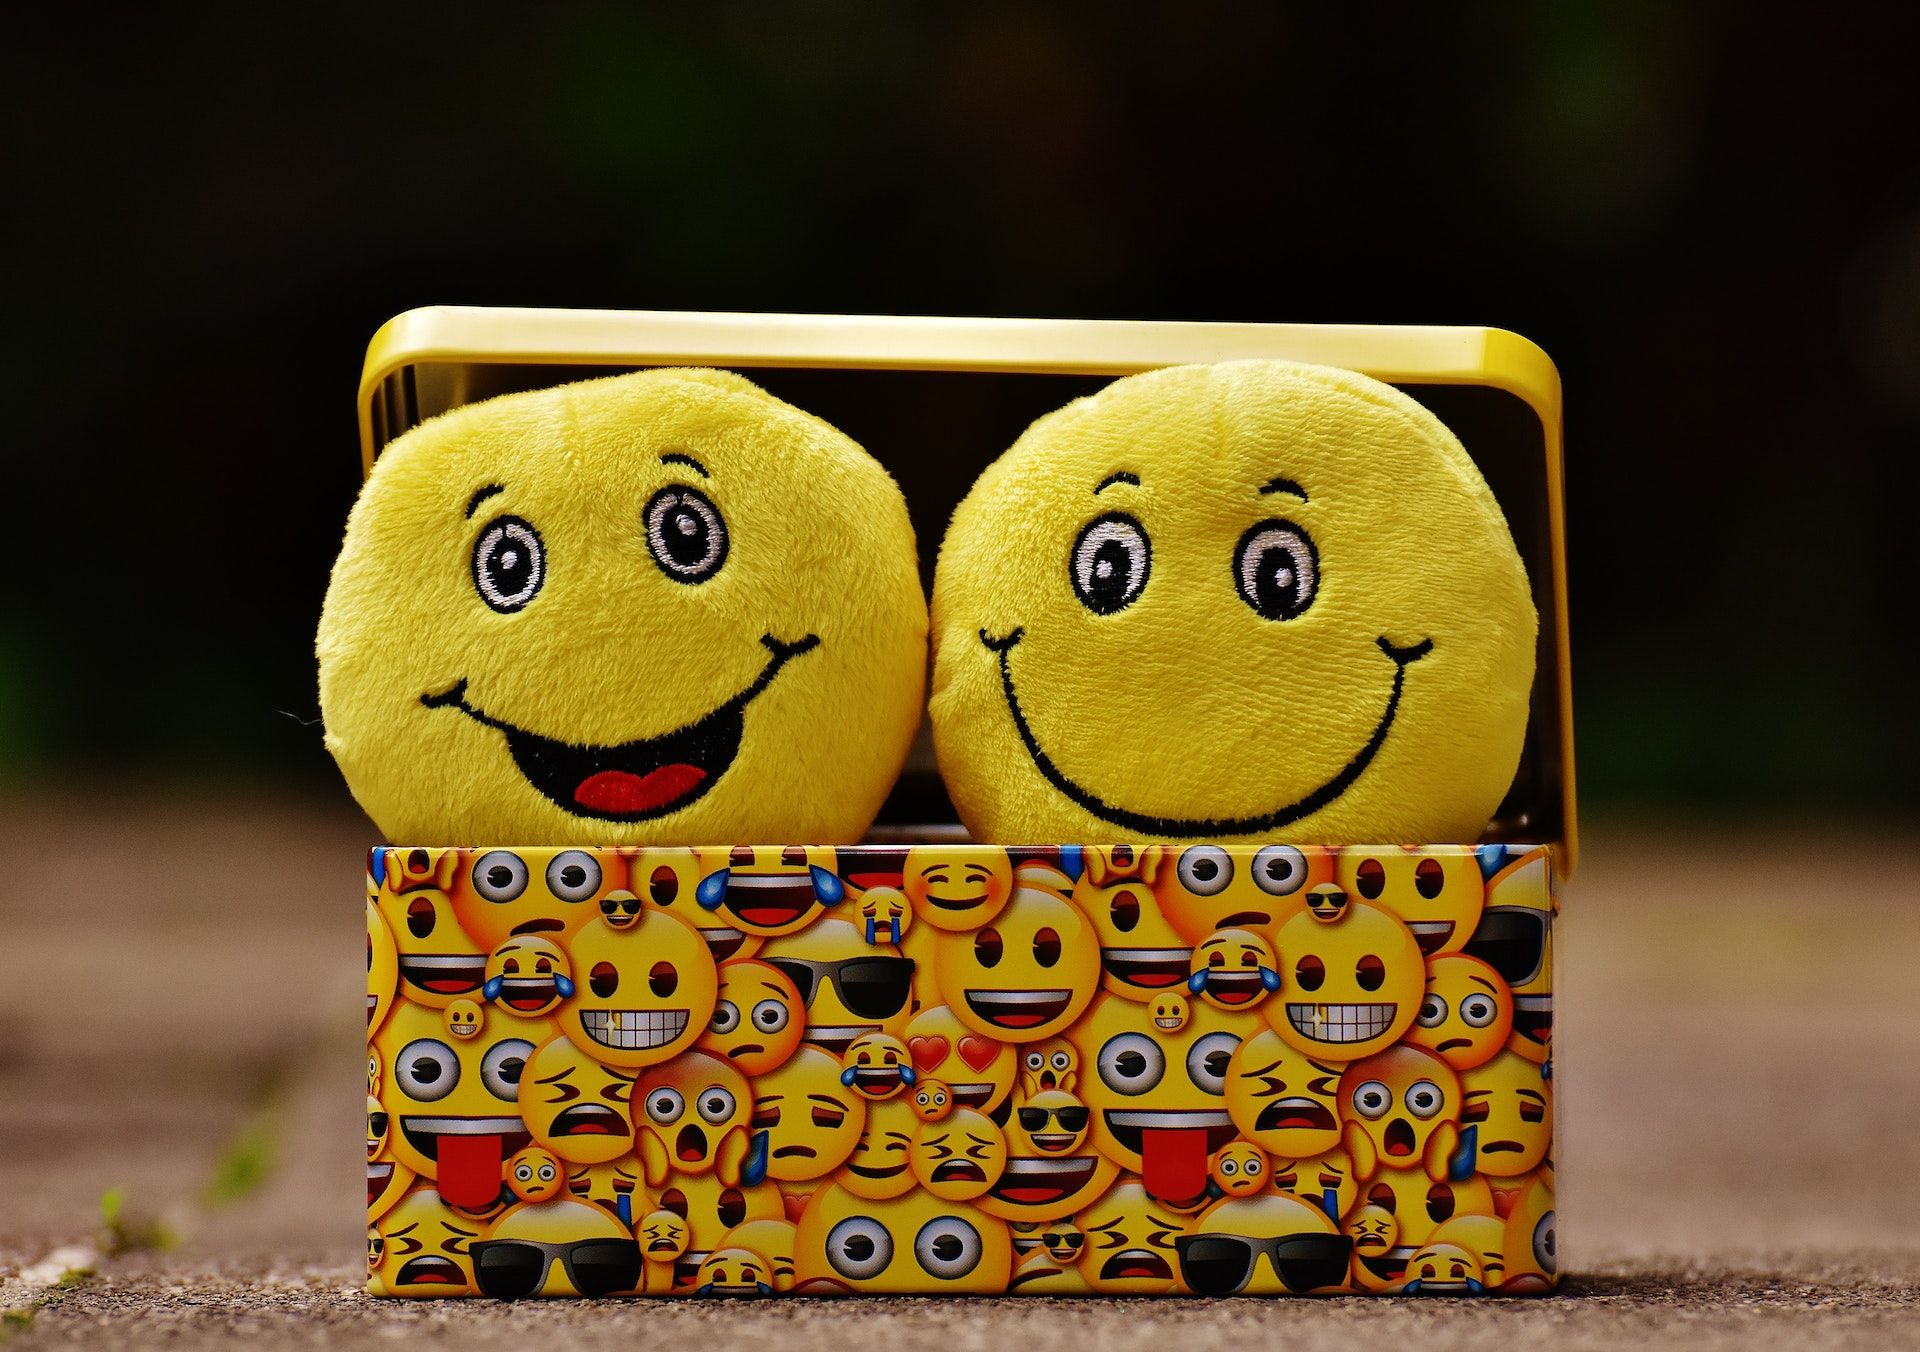 Smiling Emoji Soft Toys in a Box